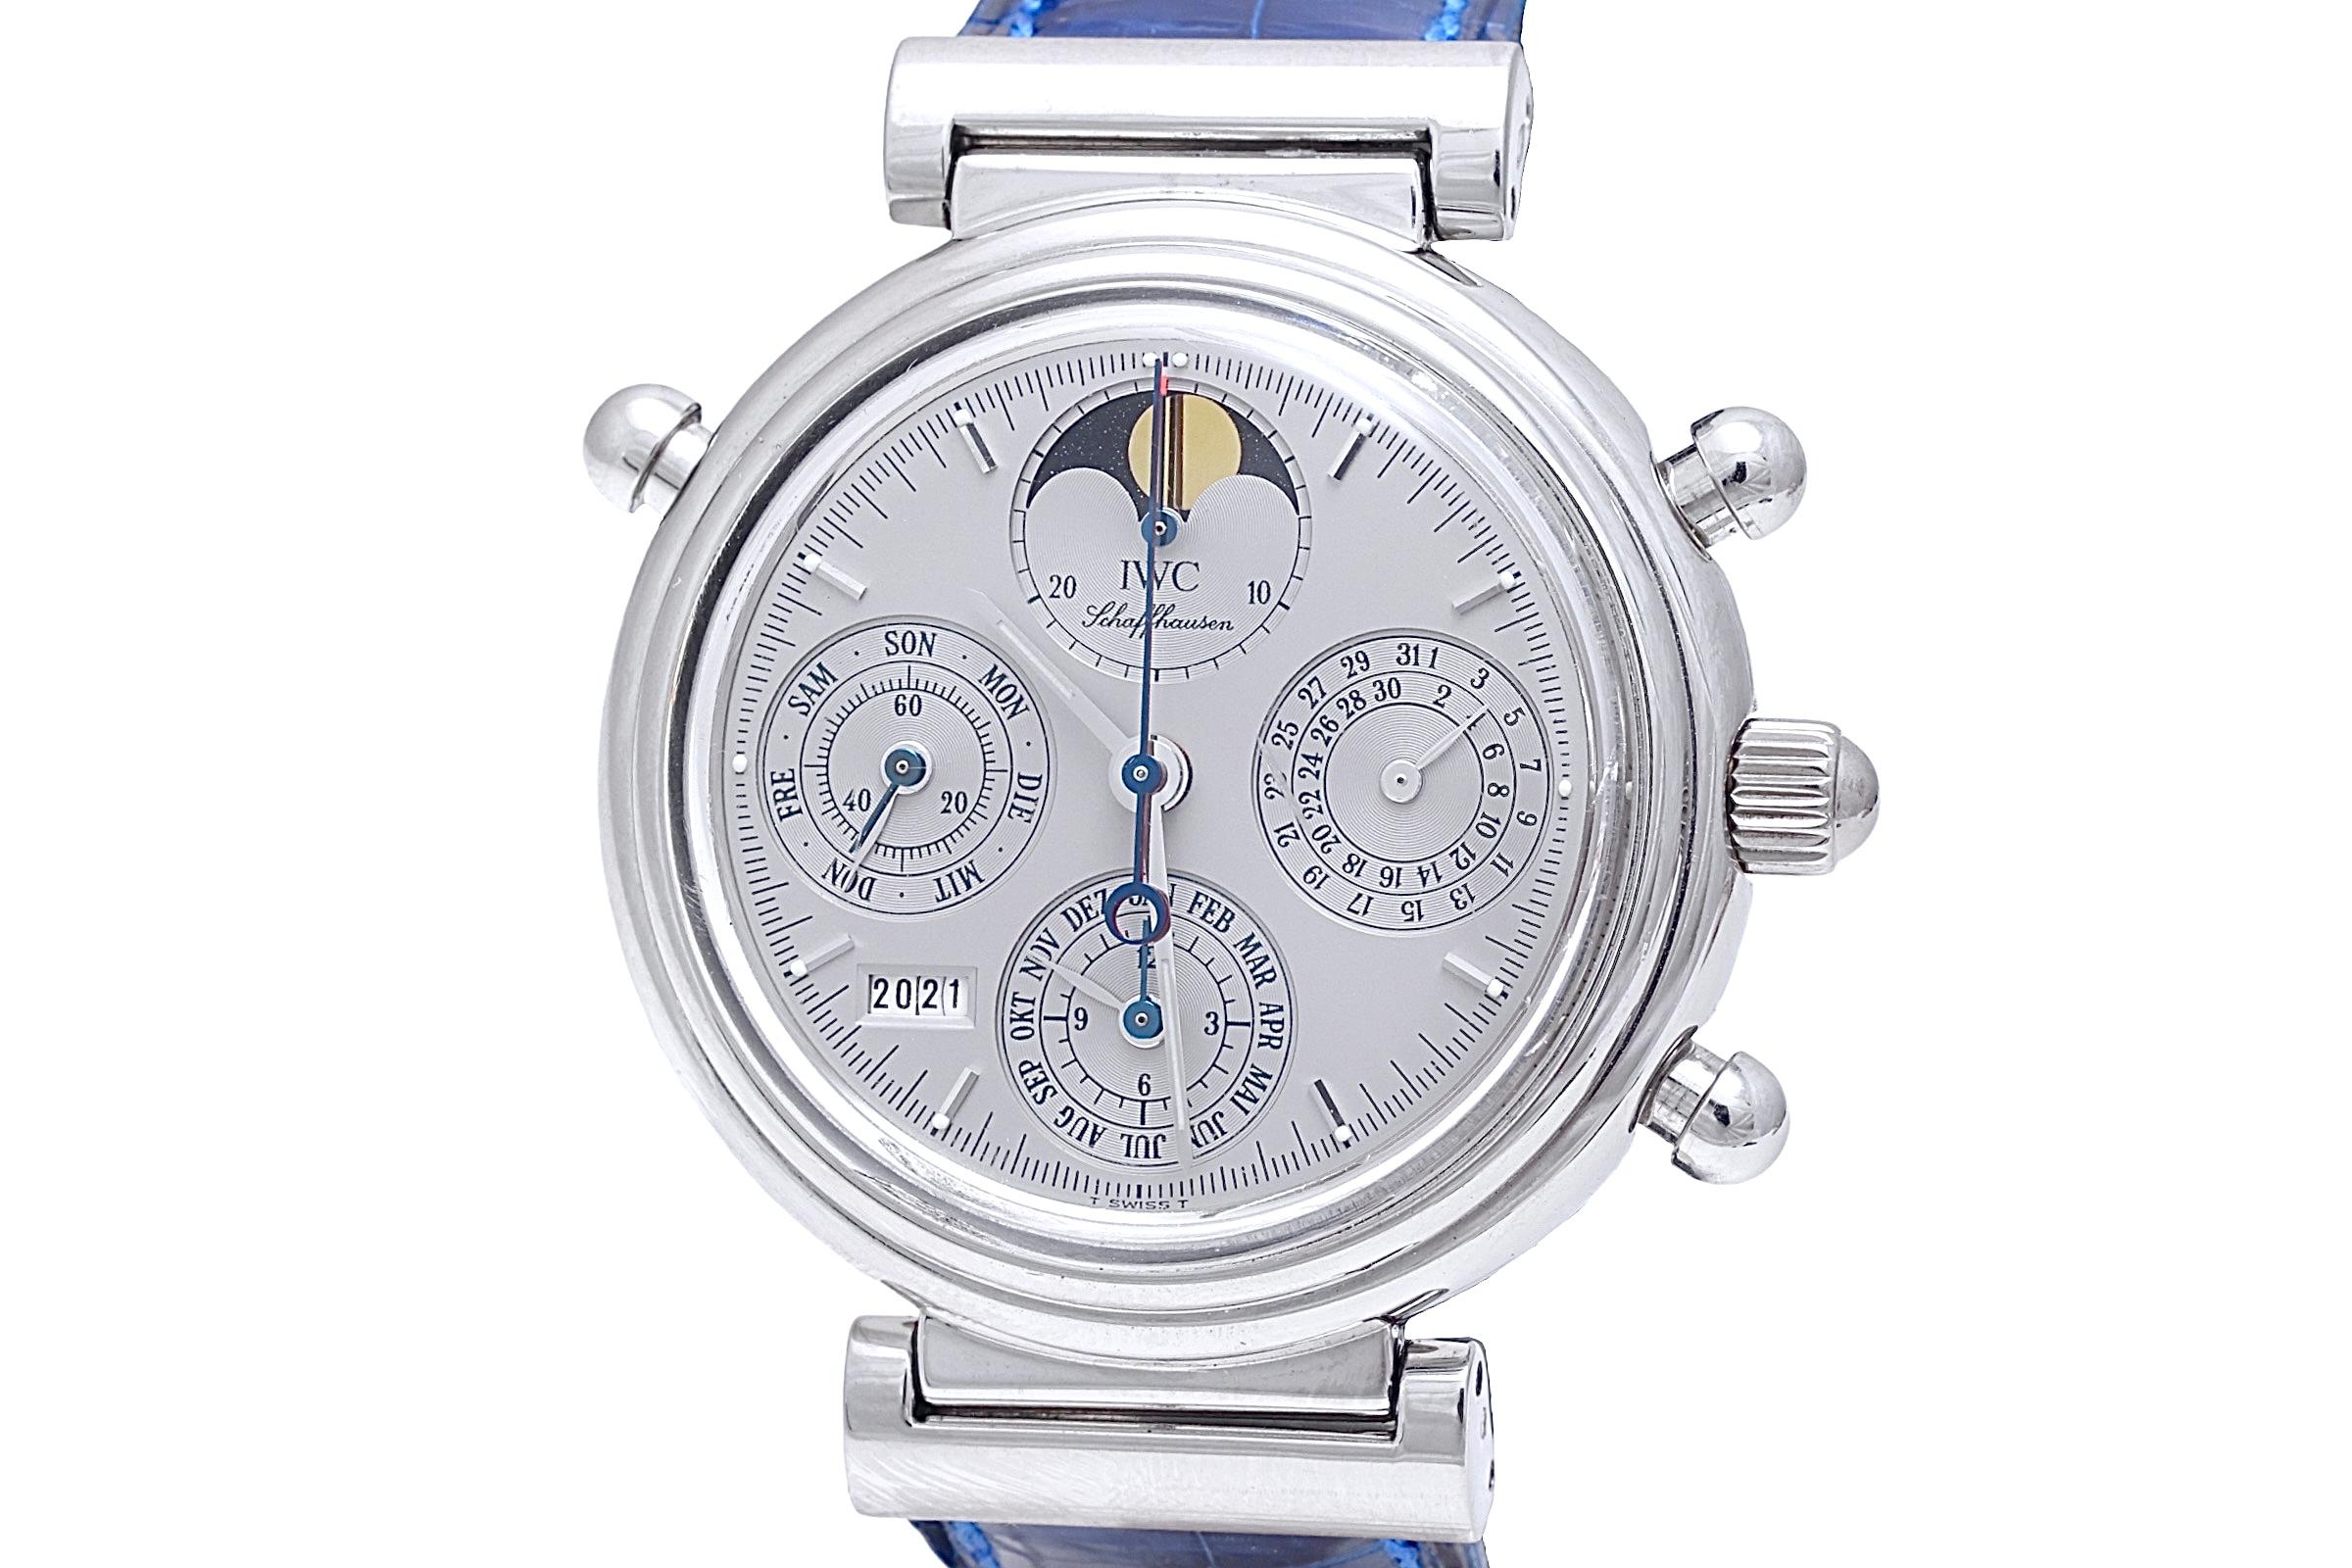 Women's or Men's Platinum IWC Perpetual Calendar Split Second Chronograph Limited Wrist Watch3751 For Sale